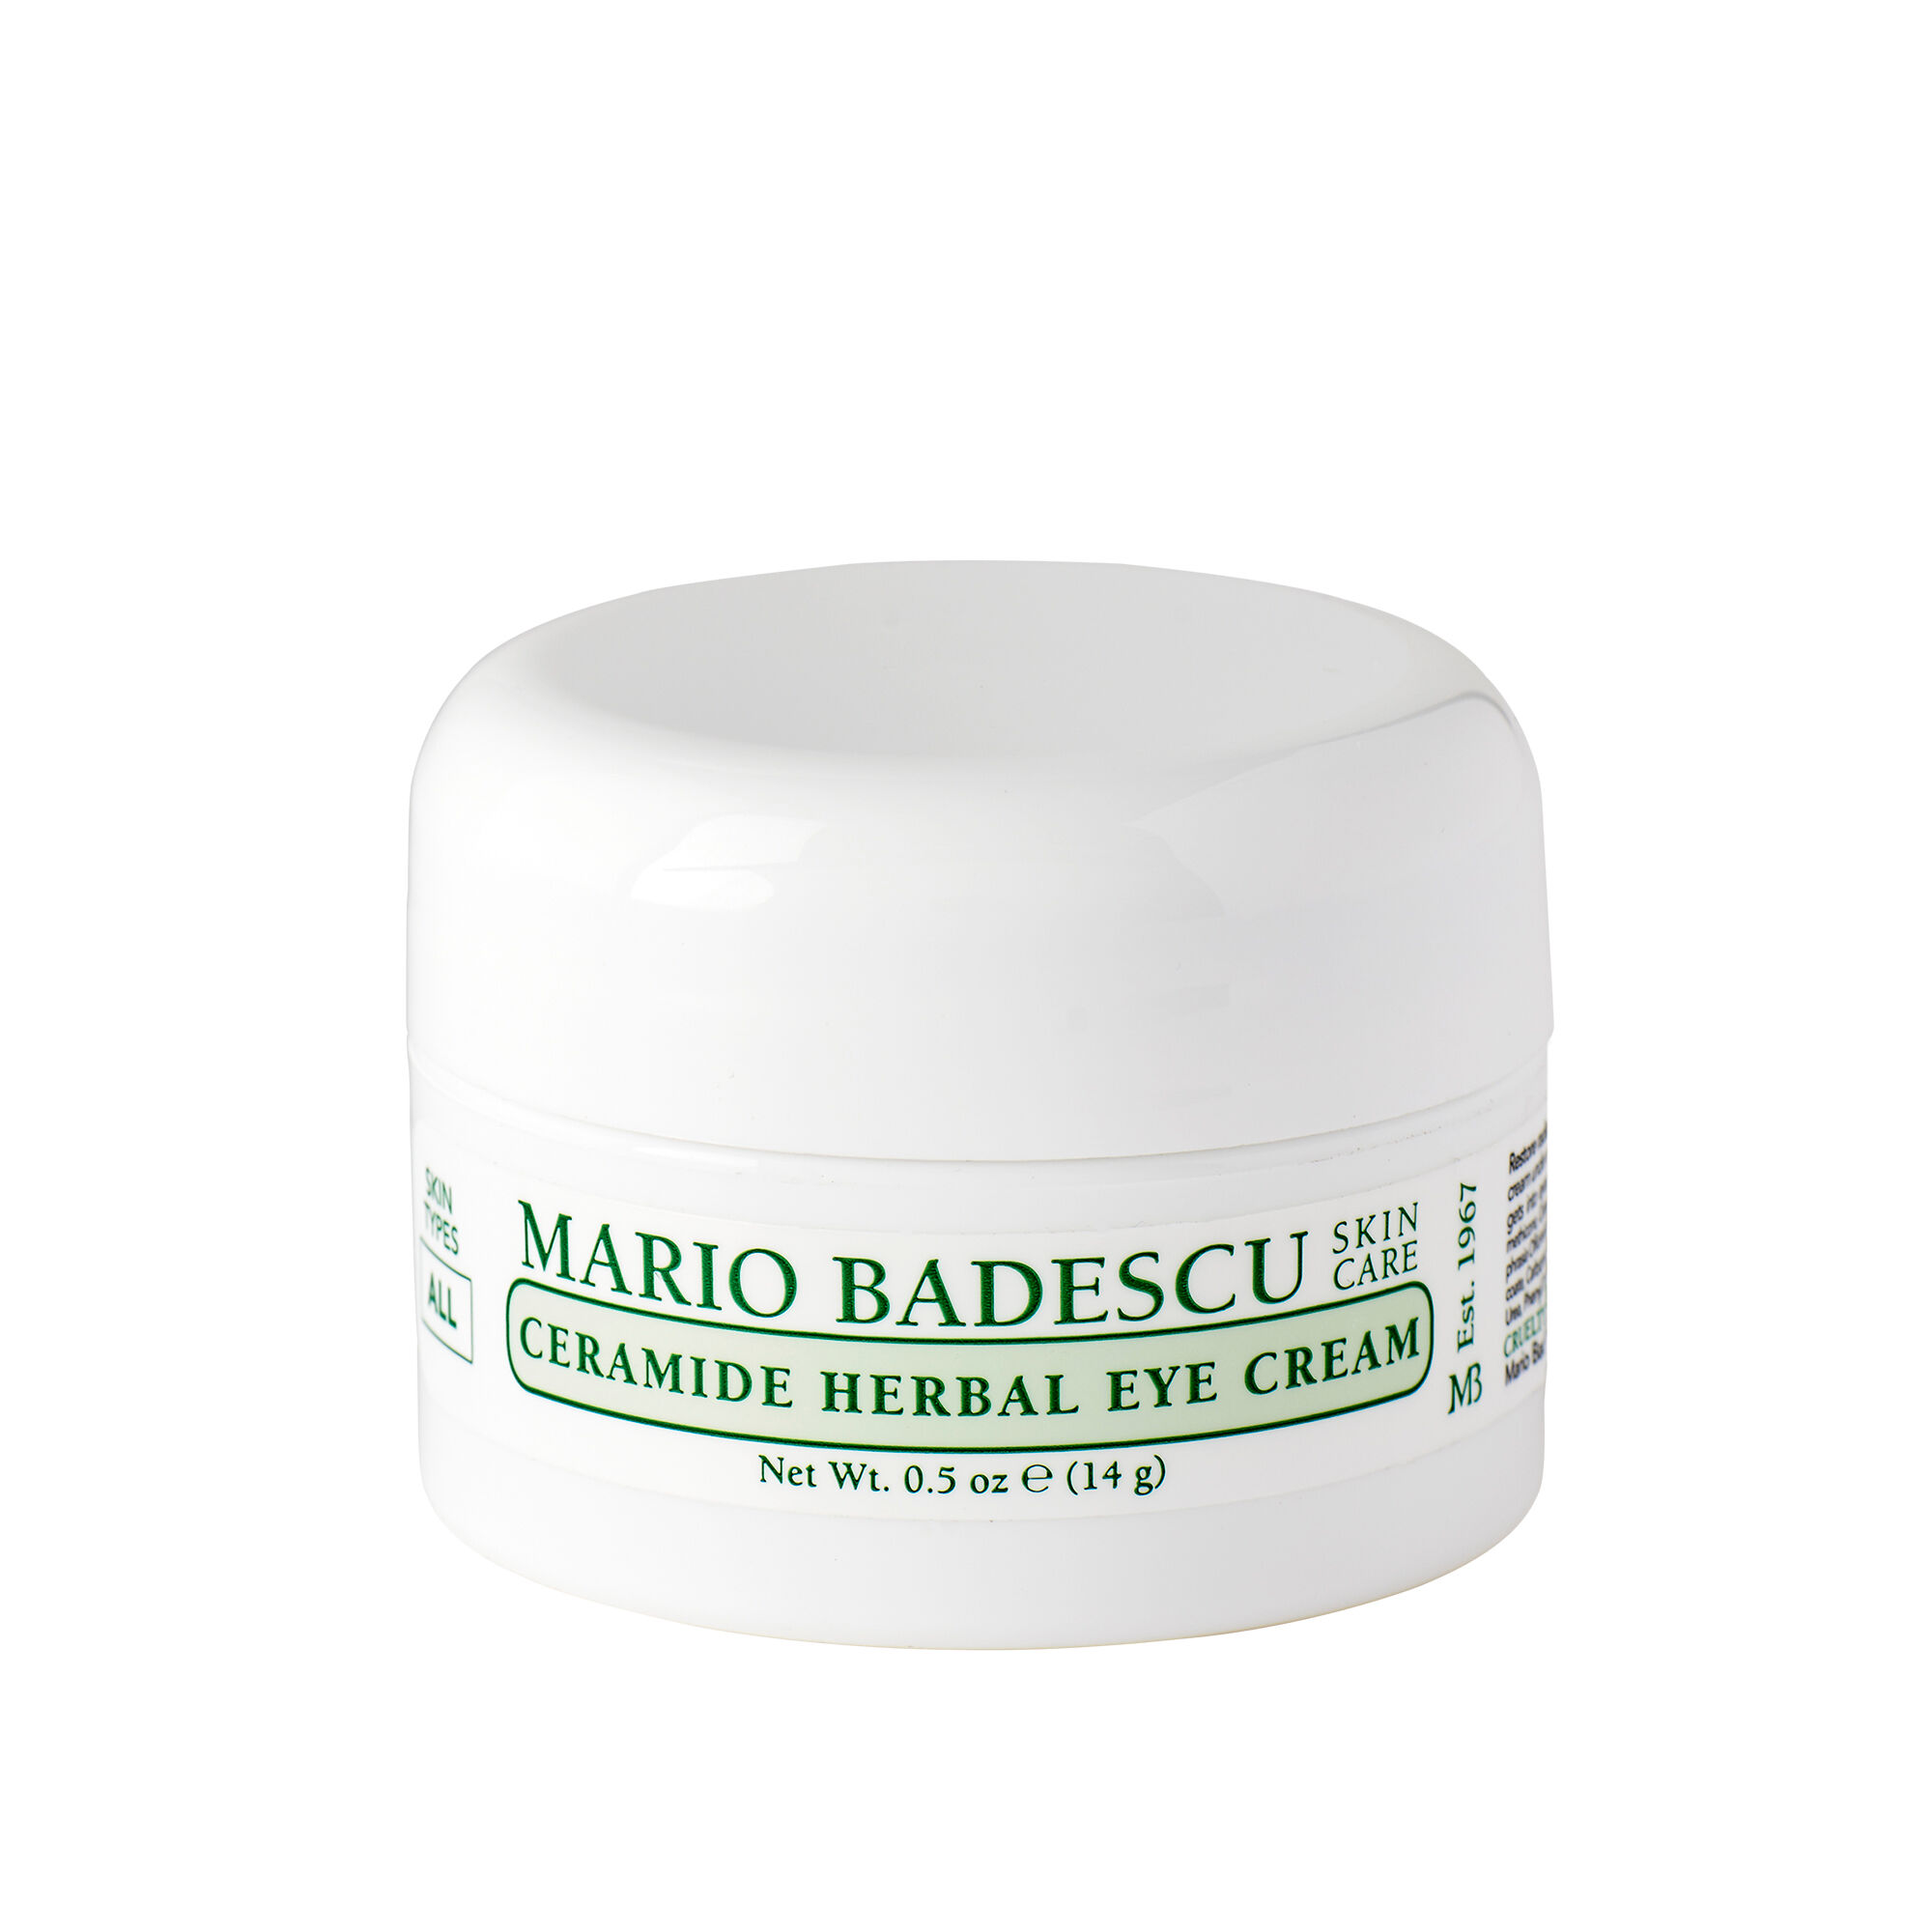 Mario Badescu Ceramide Herbal Eye Cream 14g